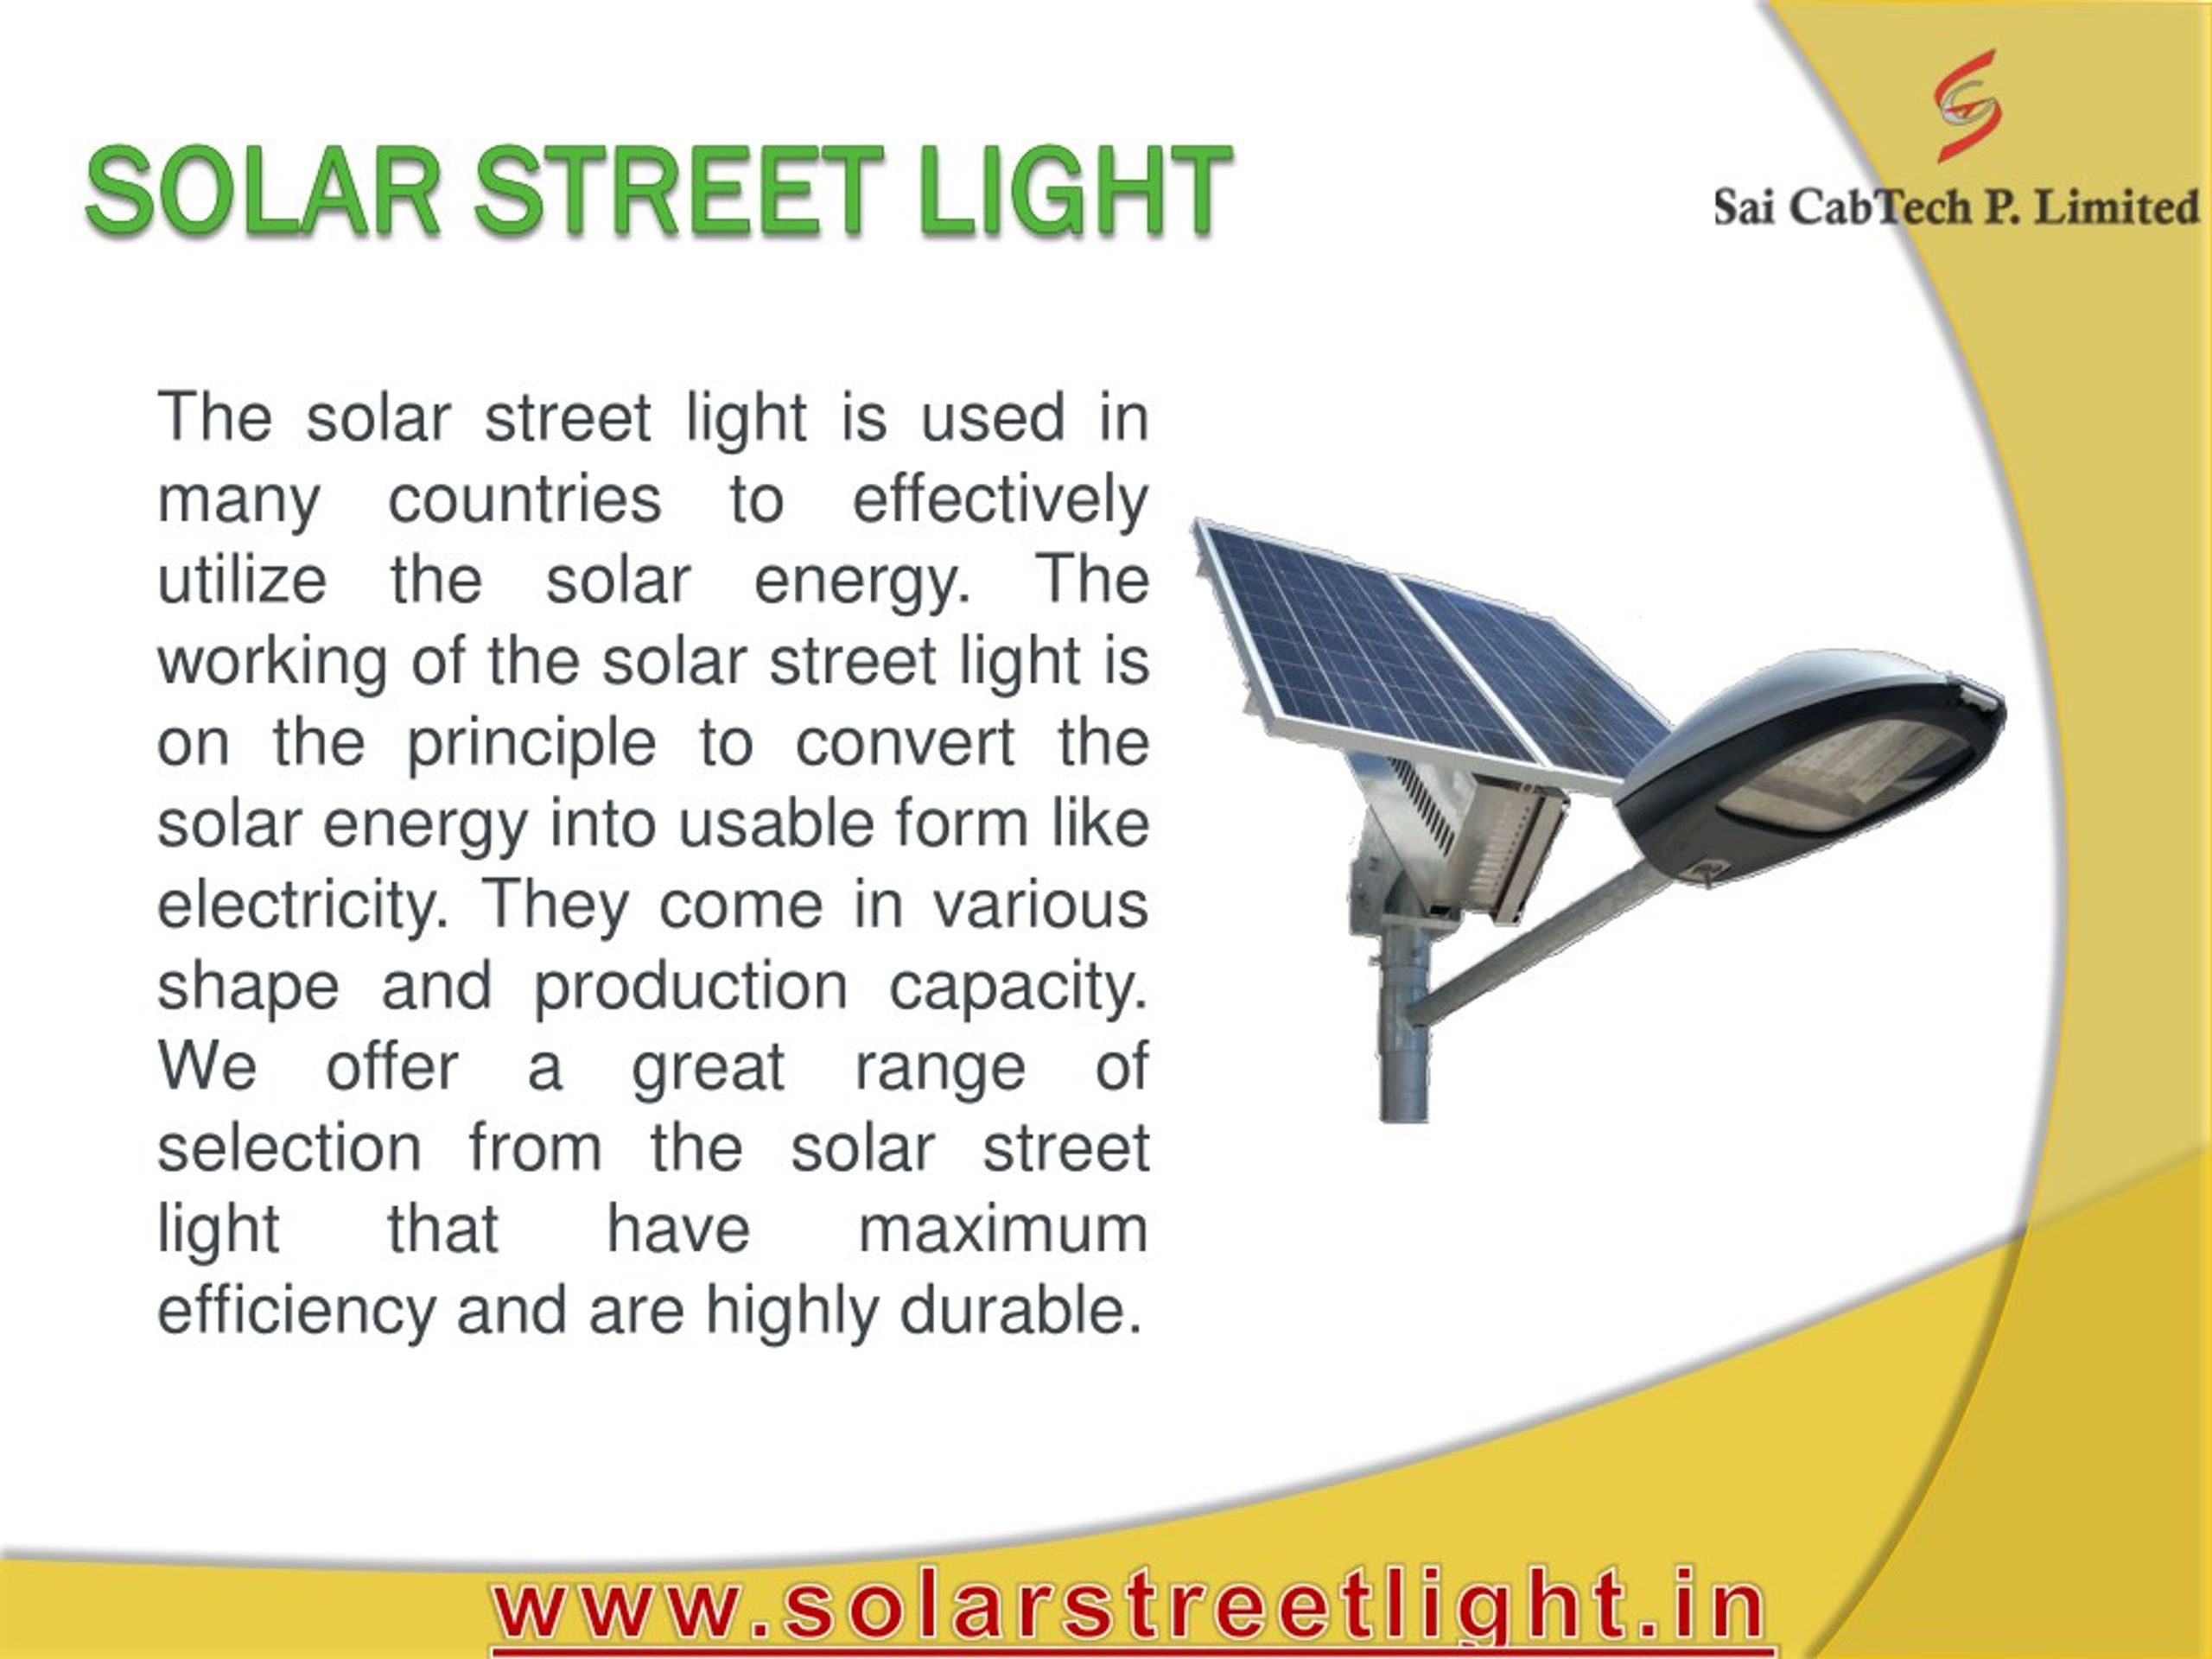 literature review on solar street light pdf